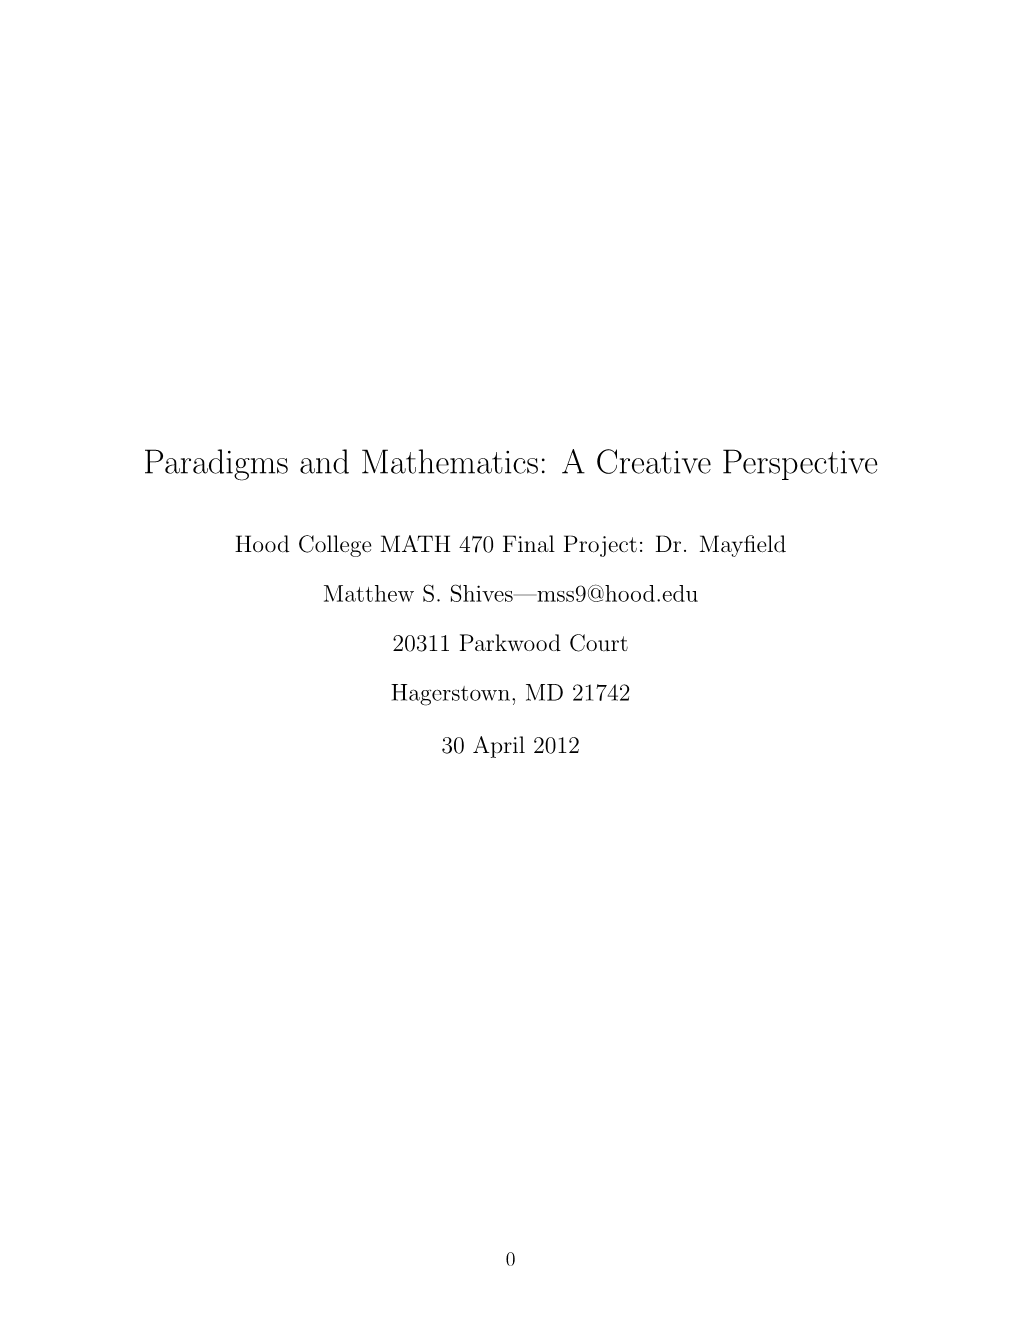 Paradigms and Mathematics: a Creative Perspective